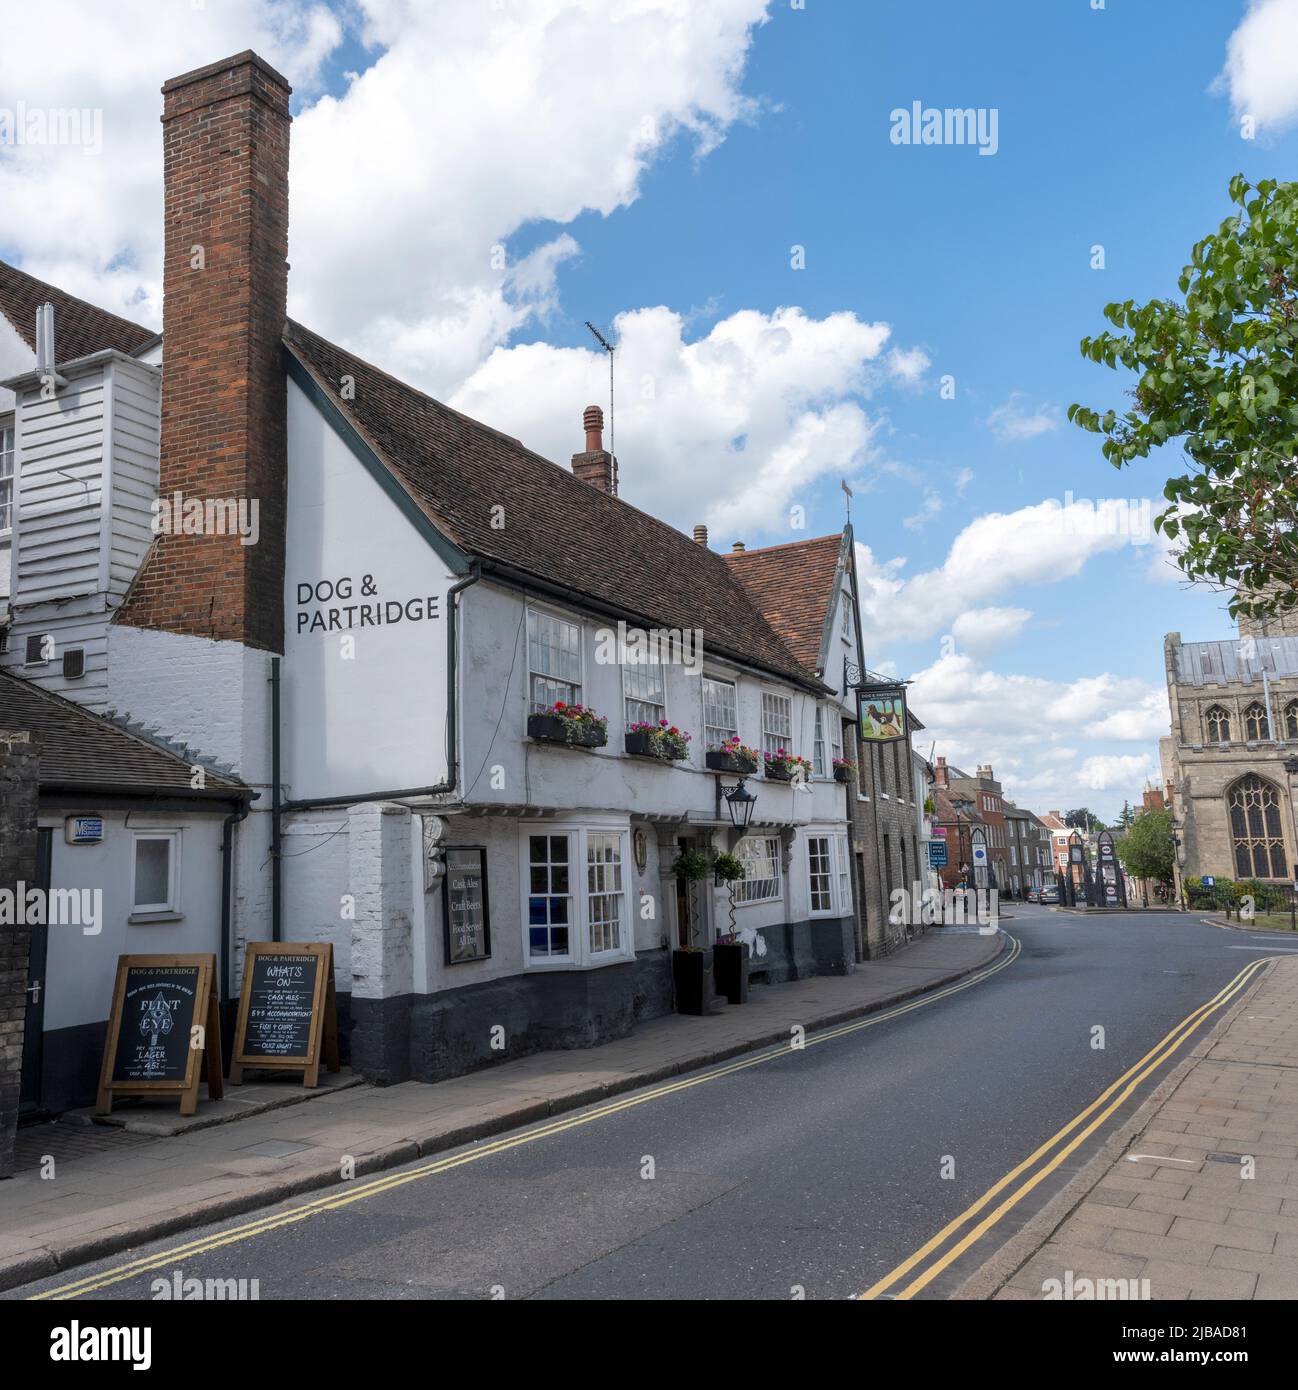 Dog and Partridge - a Greene King pub - Crown Street, Bury St Edmunds, Suffolk, England, UK Stock Photo